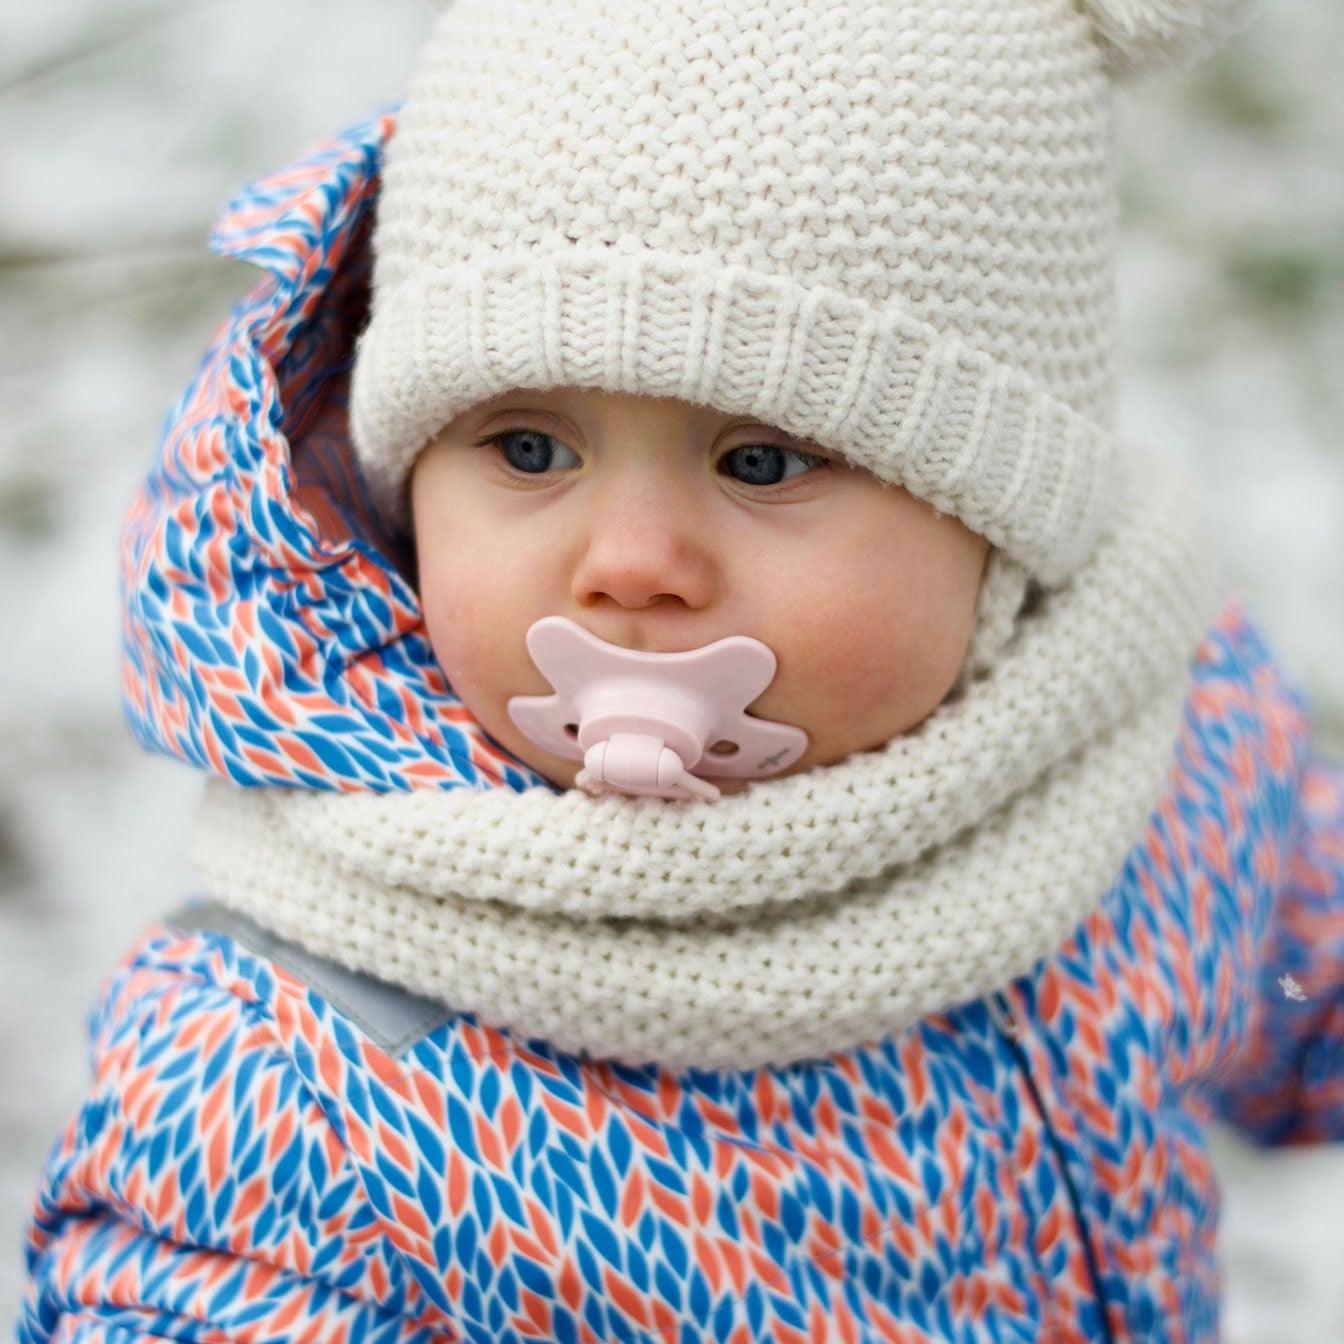 Ducksday: kombinezon zimowy Baby Snowsuit 68 0-3 M - Noski Noski